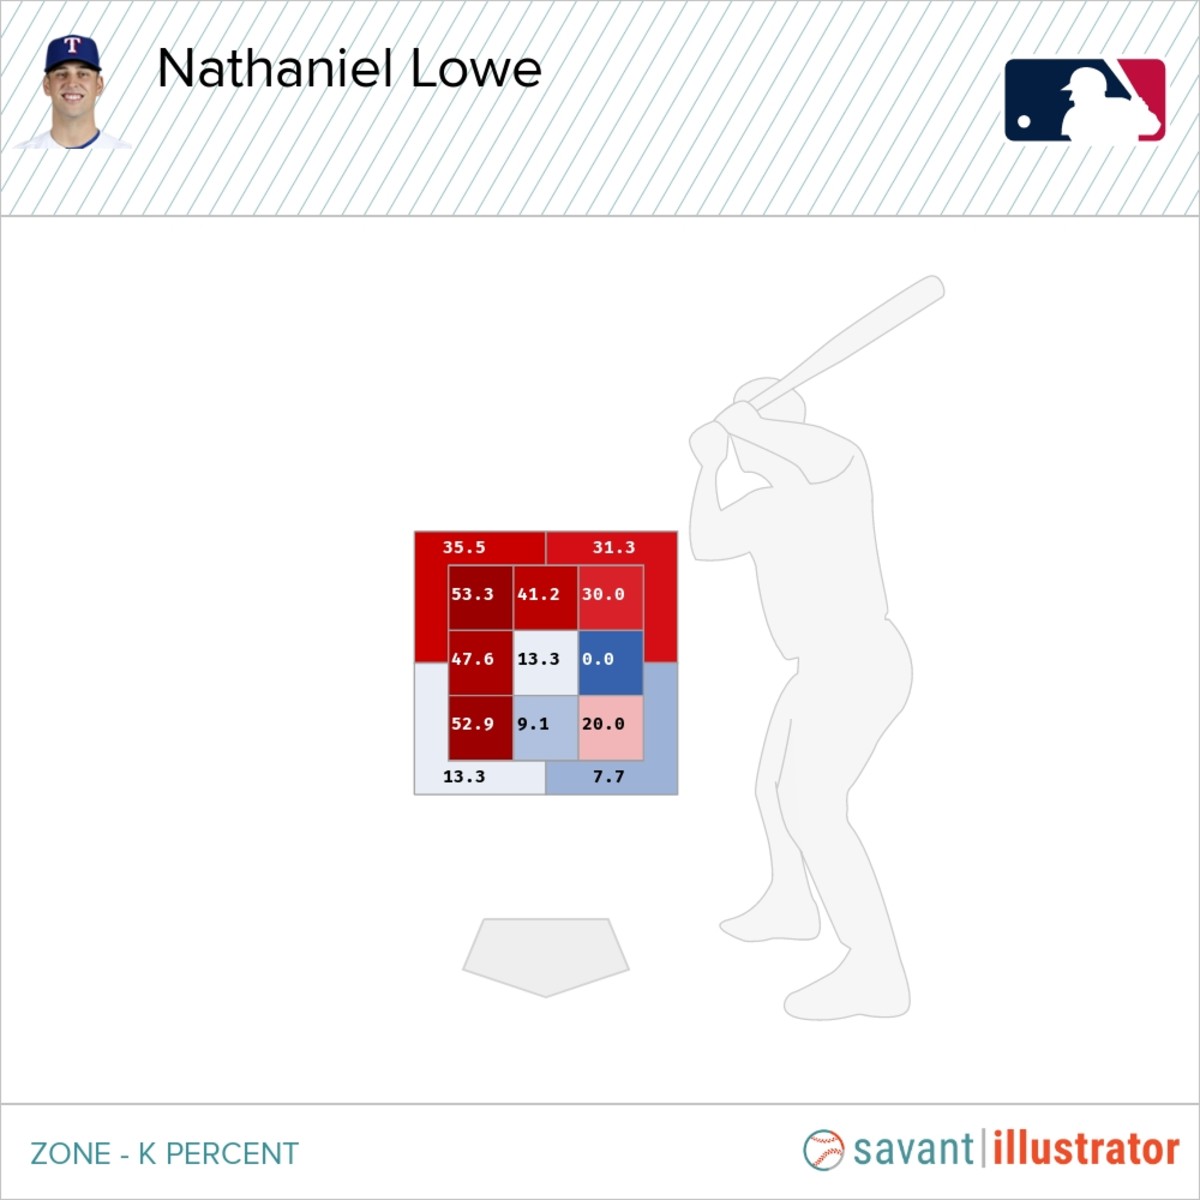 Nathaniel Lowe's K% vs four-seam fastballs in 2021